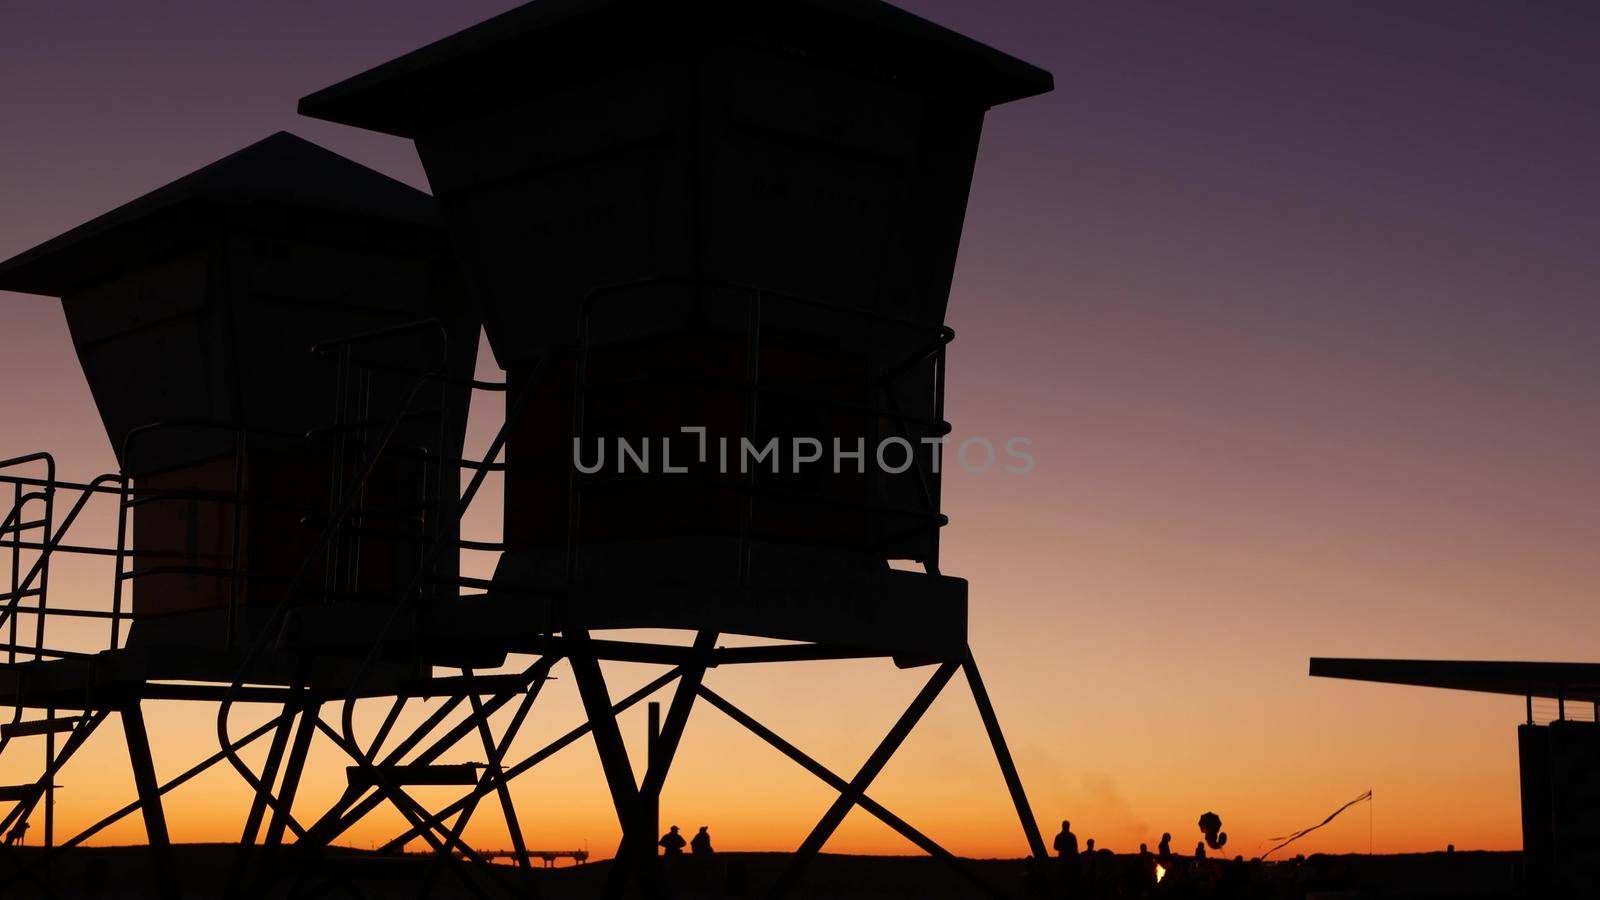 Lifeguard stand, hut or house on ocean beach after sunset, California coast, USA by DogoraSun